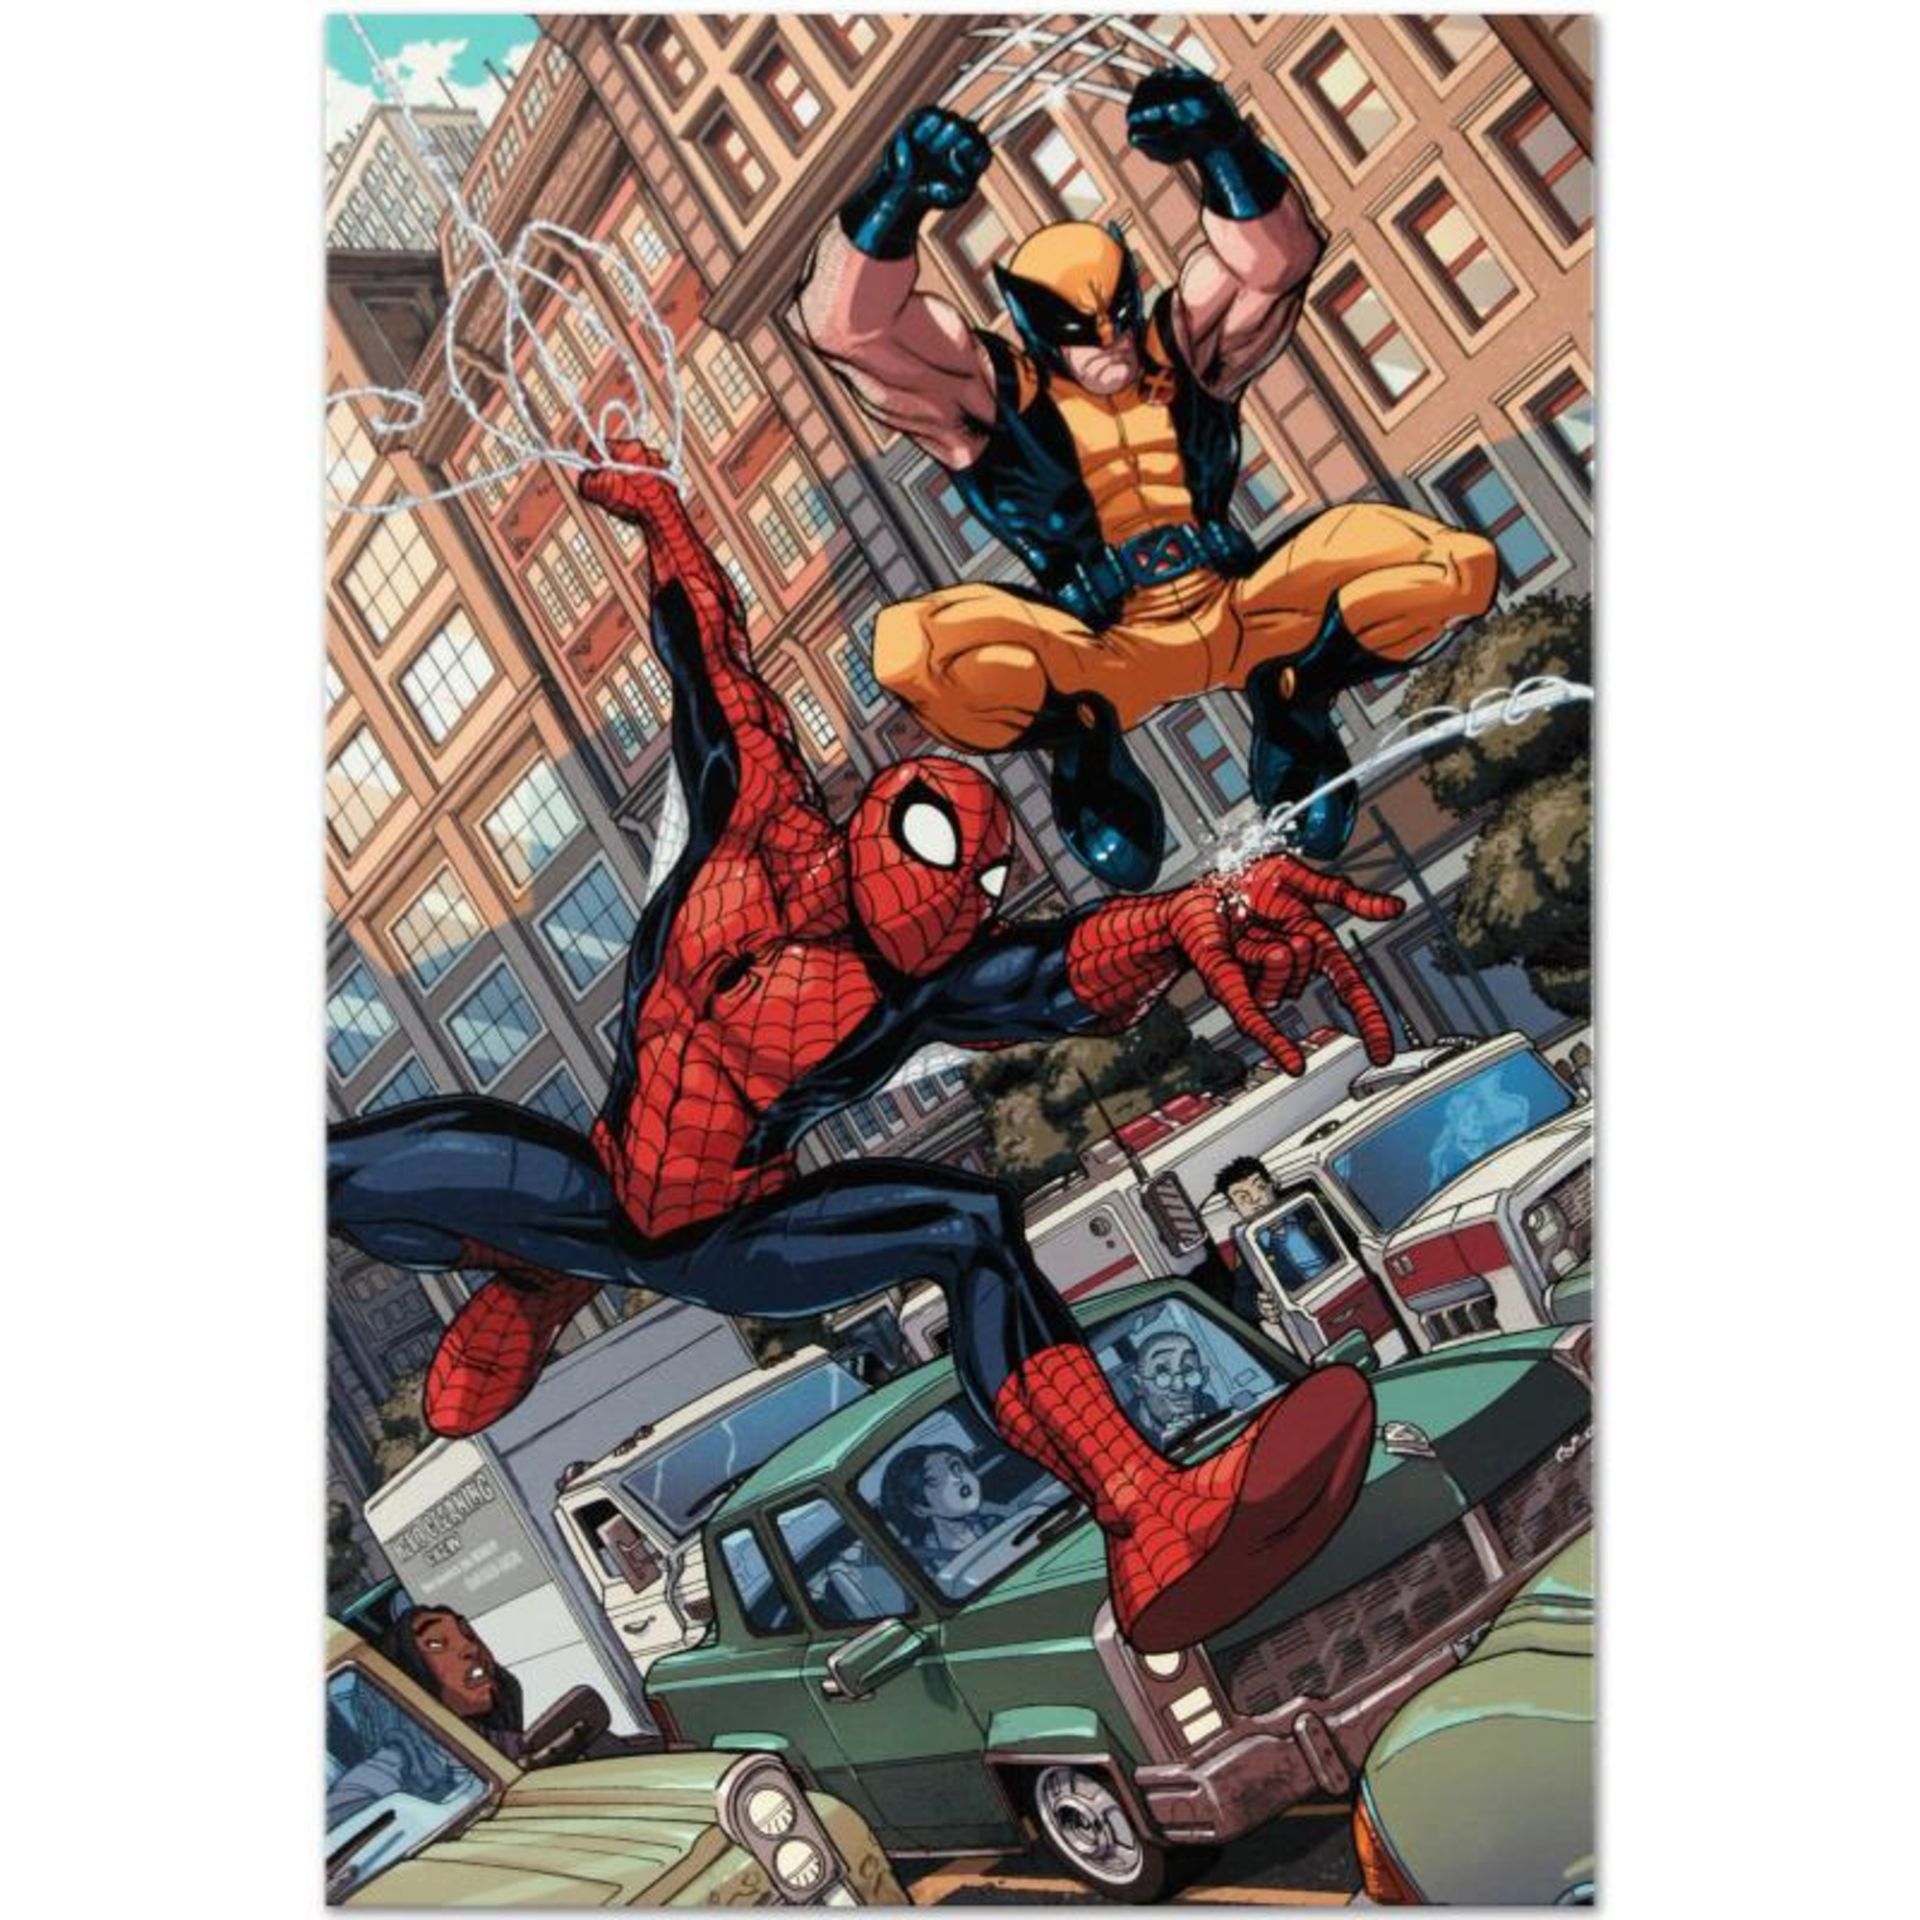 Marvel Comics "Astonishing Spider-Man & Wolverine #1" Numbered Limited Edition G